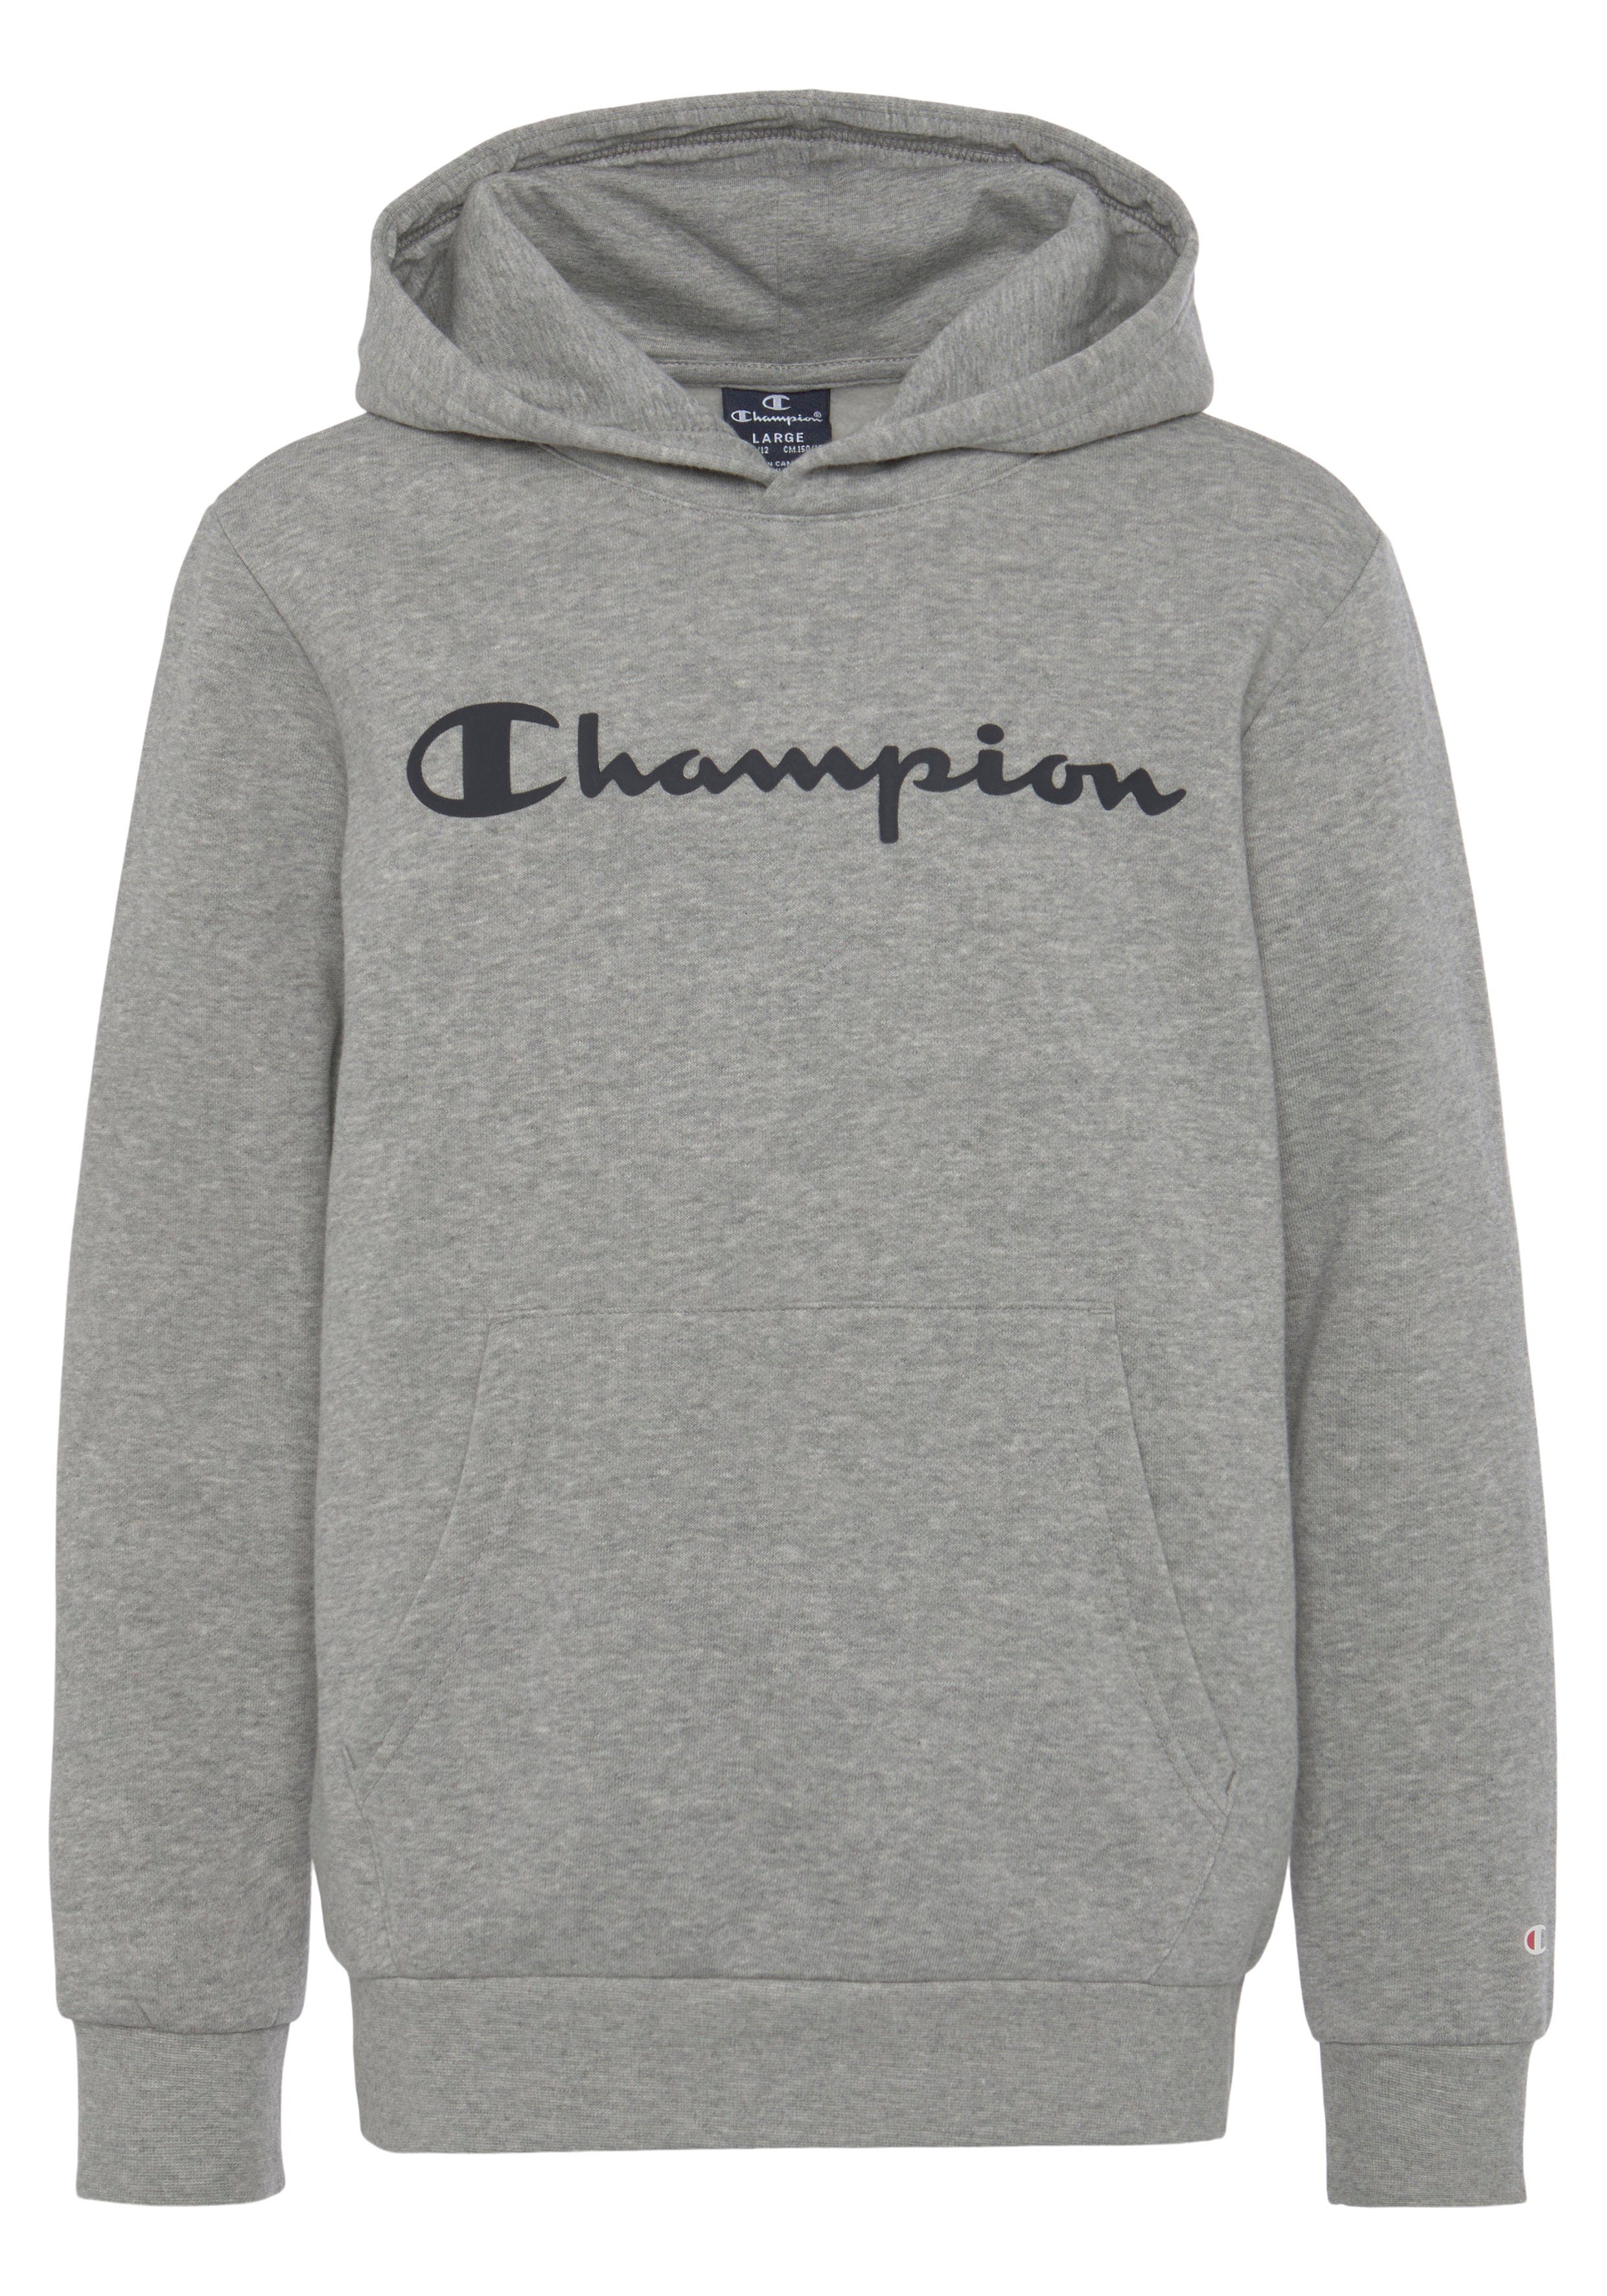 Sweatshirt Kapuzensweatshirt Champion grau Hooded